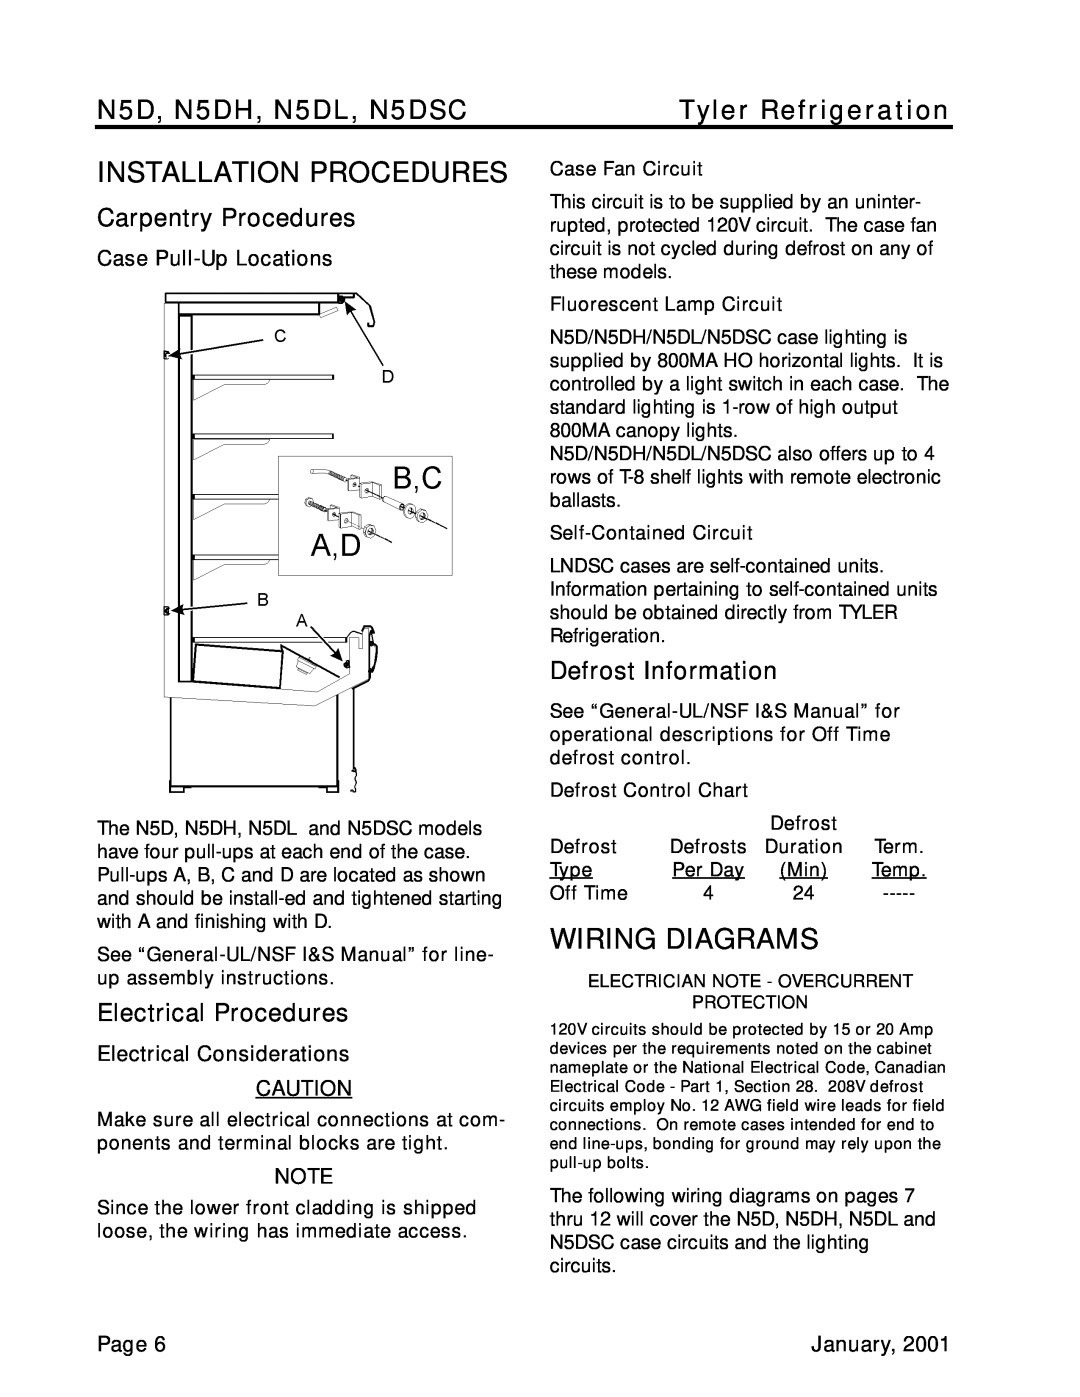 Tyler Refrigeration service manual Installation Procedures, Wiring Diagrams, N5D, N5DH, N5DL, N5DSC, Tyler Refrigeration 